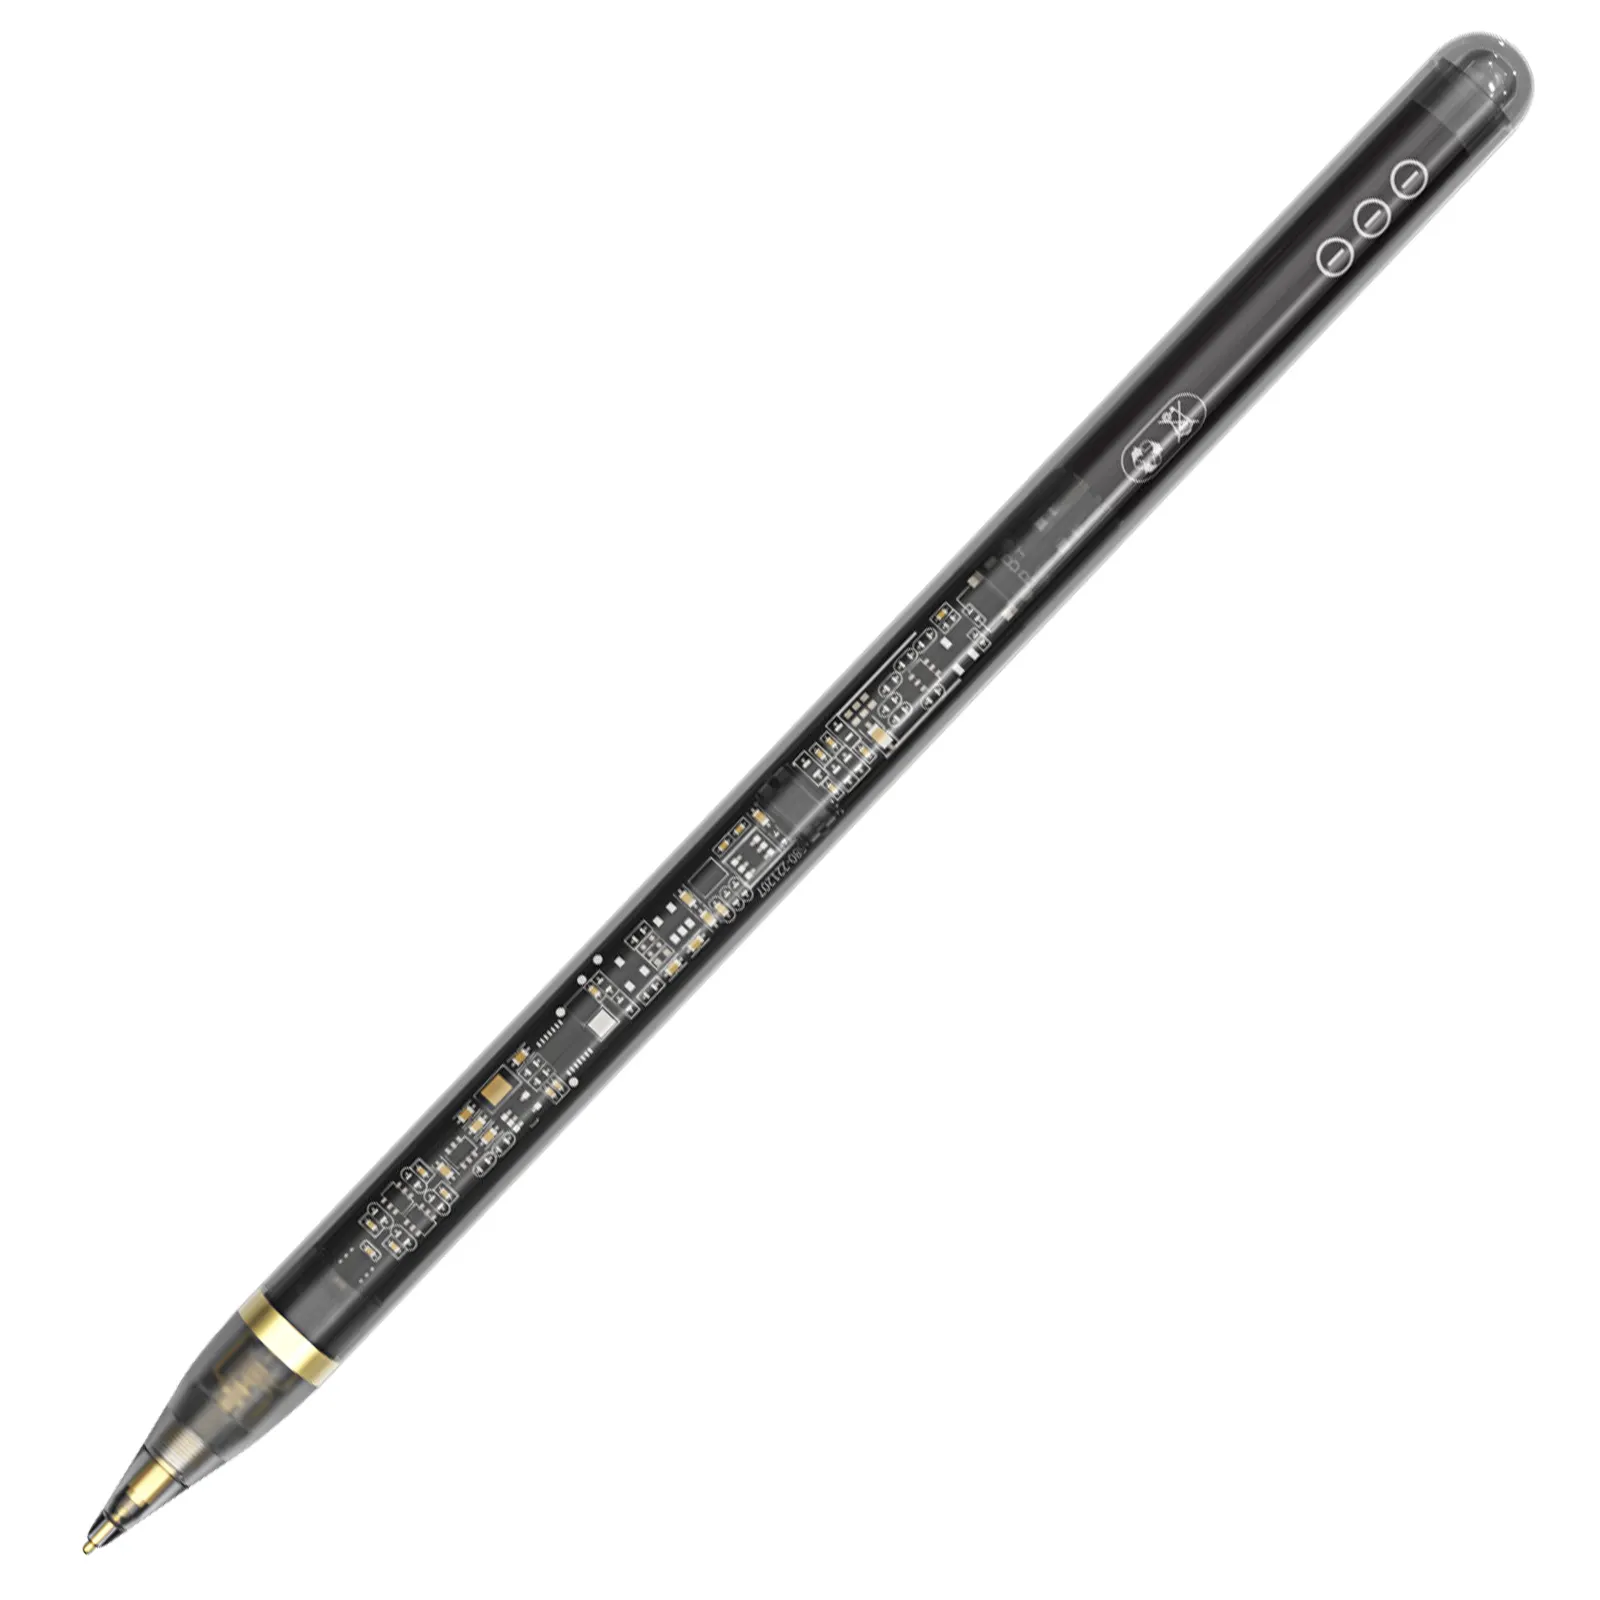 Ahastyle ปากกาสไตลัสดิจิทัลปากกาปรับจุดปากกาสำหรับหน้าจอสัมผัสเข้ากันได้กับ iPhone iPad และแท็บเล็ตอื่นๆ